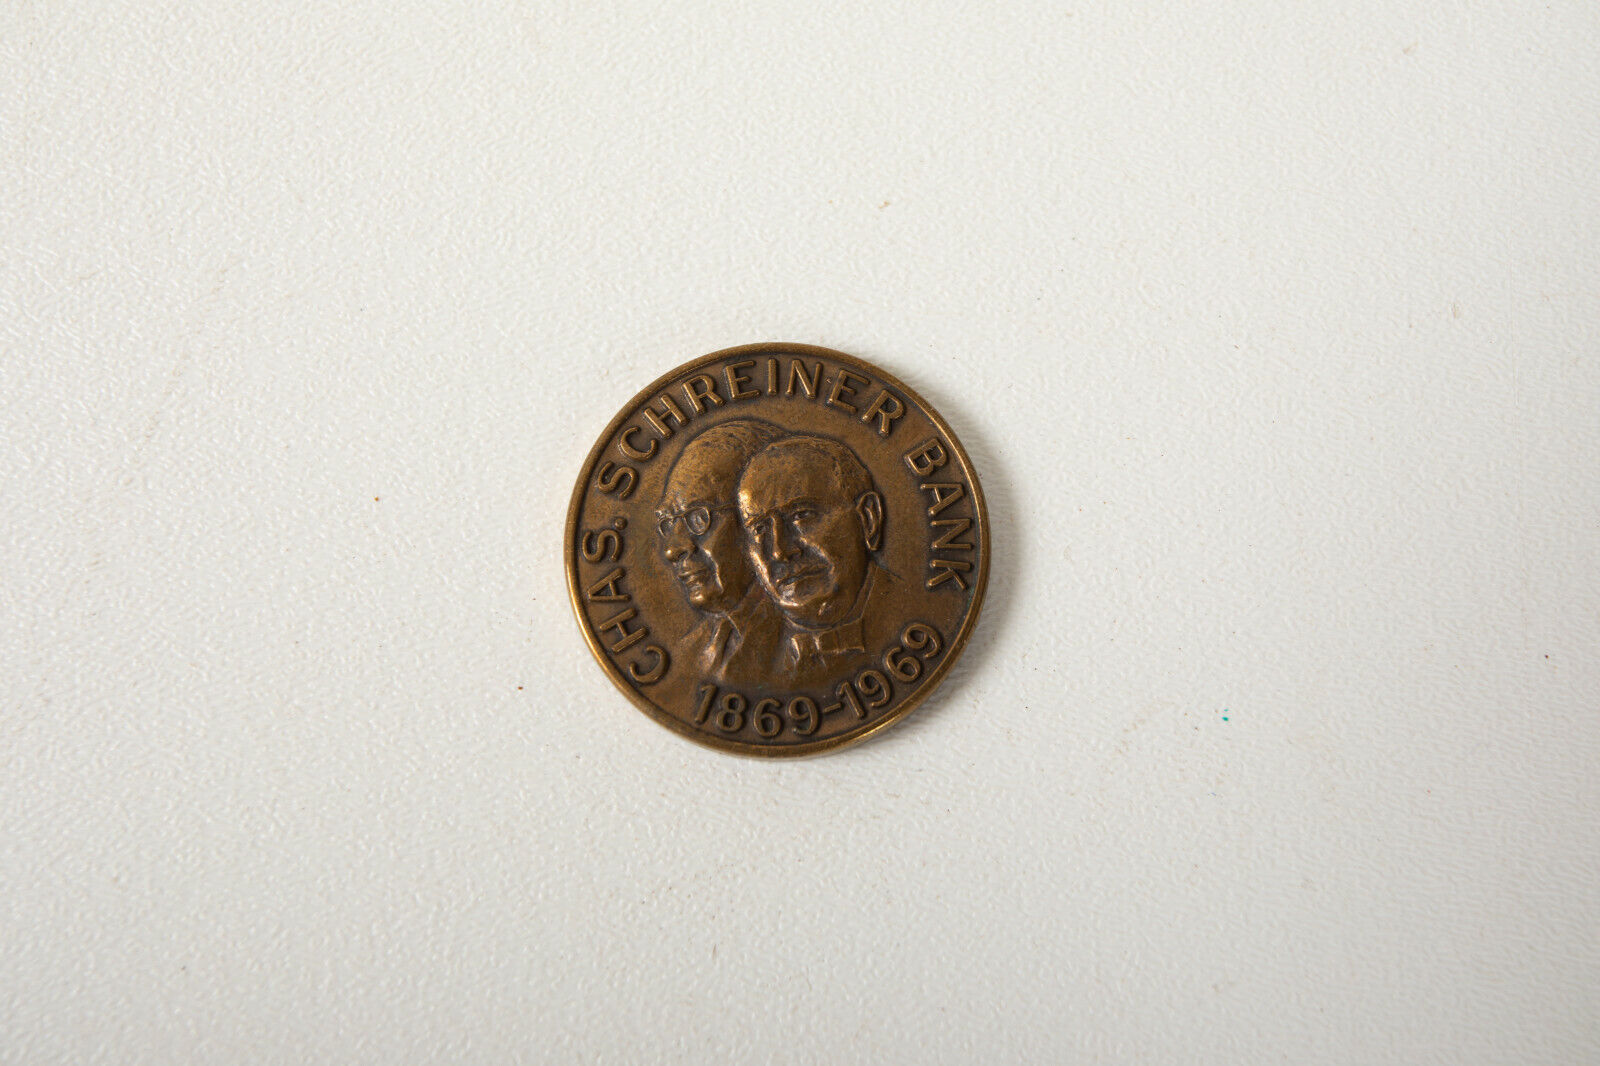 Chas. Schreiner Bank 1869-1969 (B6B) Commemorative Medallion (JSF6) Bronze Token